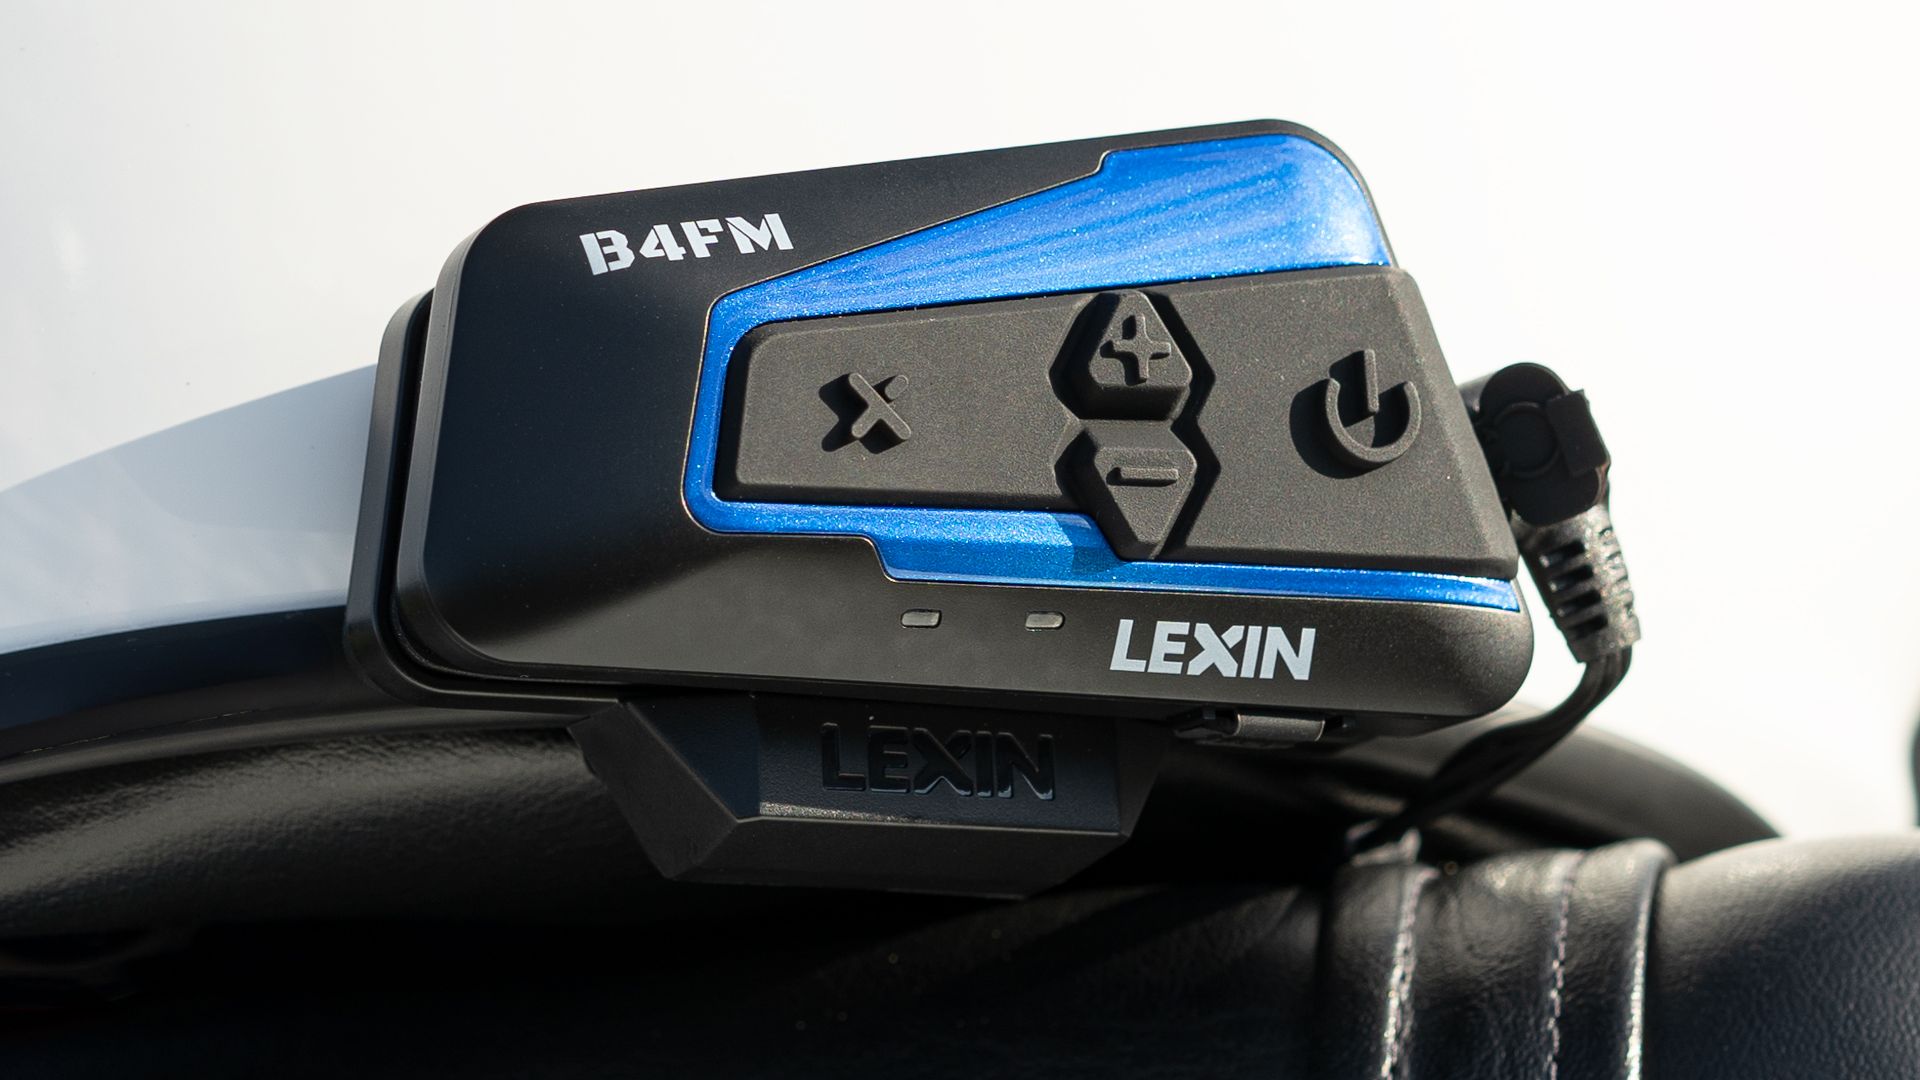 Closeup shot of a LEXIN B4FM Motorcycle Bluetooth Headset on a motorcycle helmet.